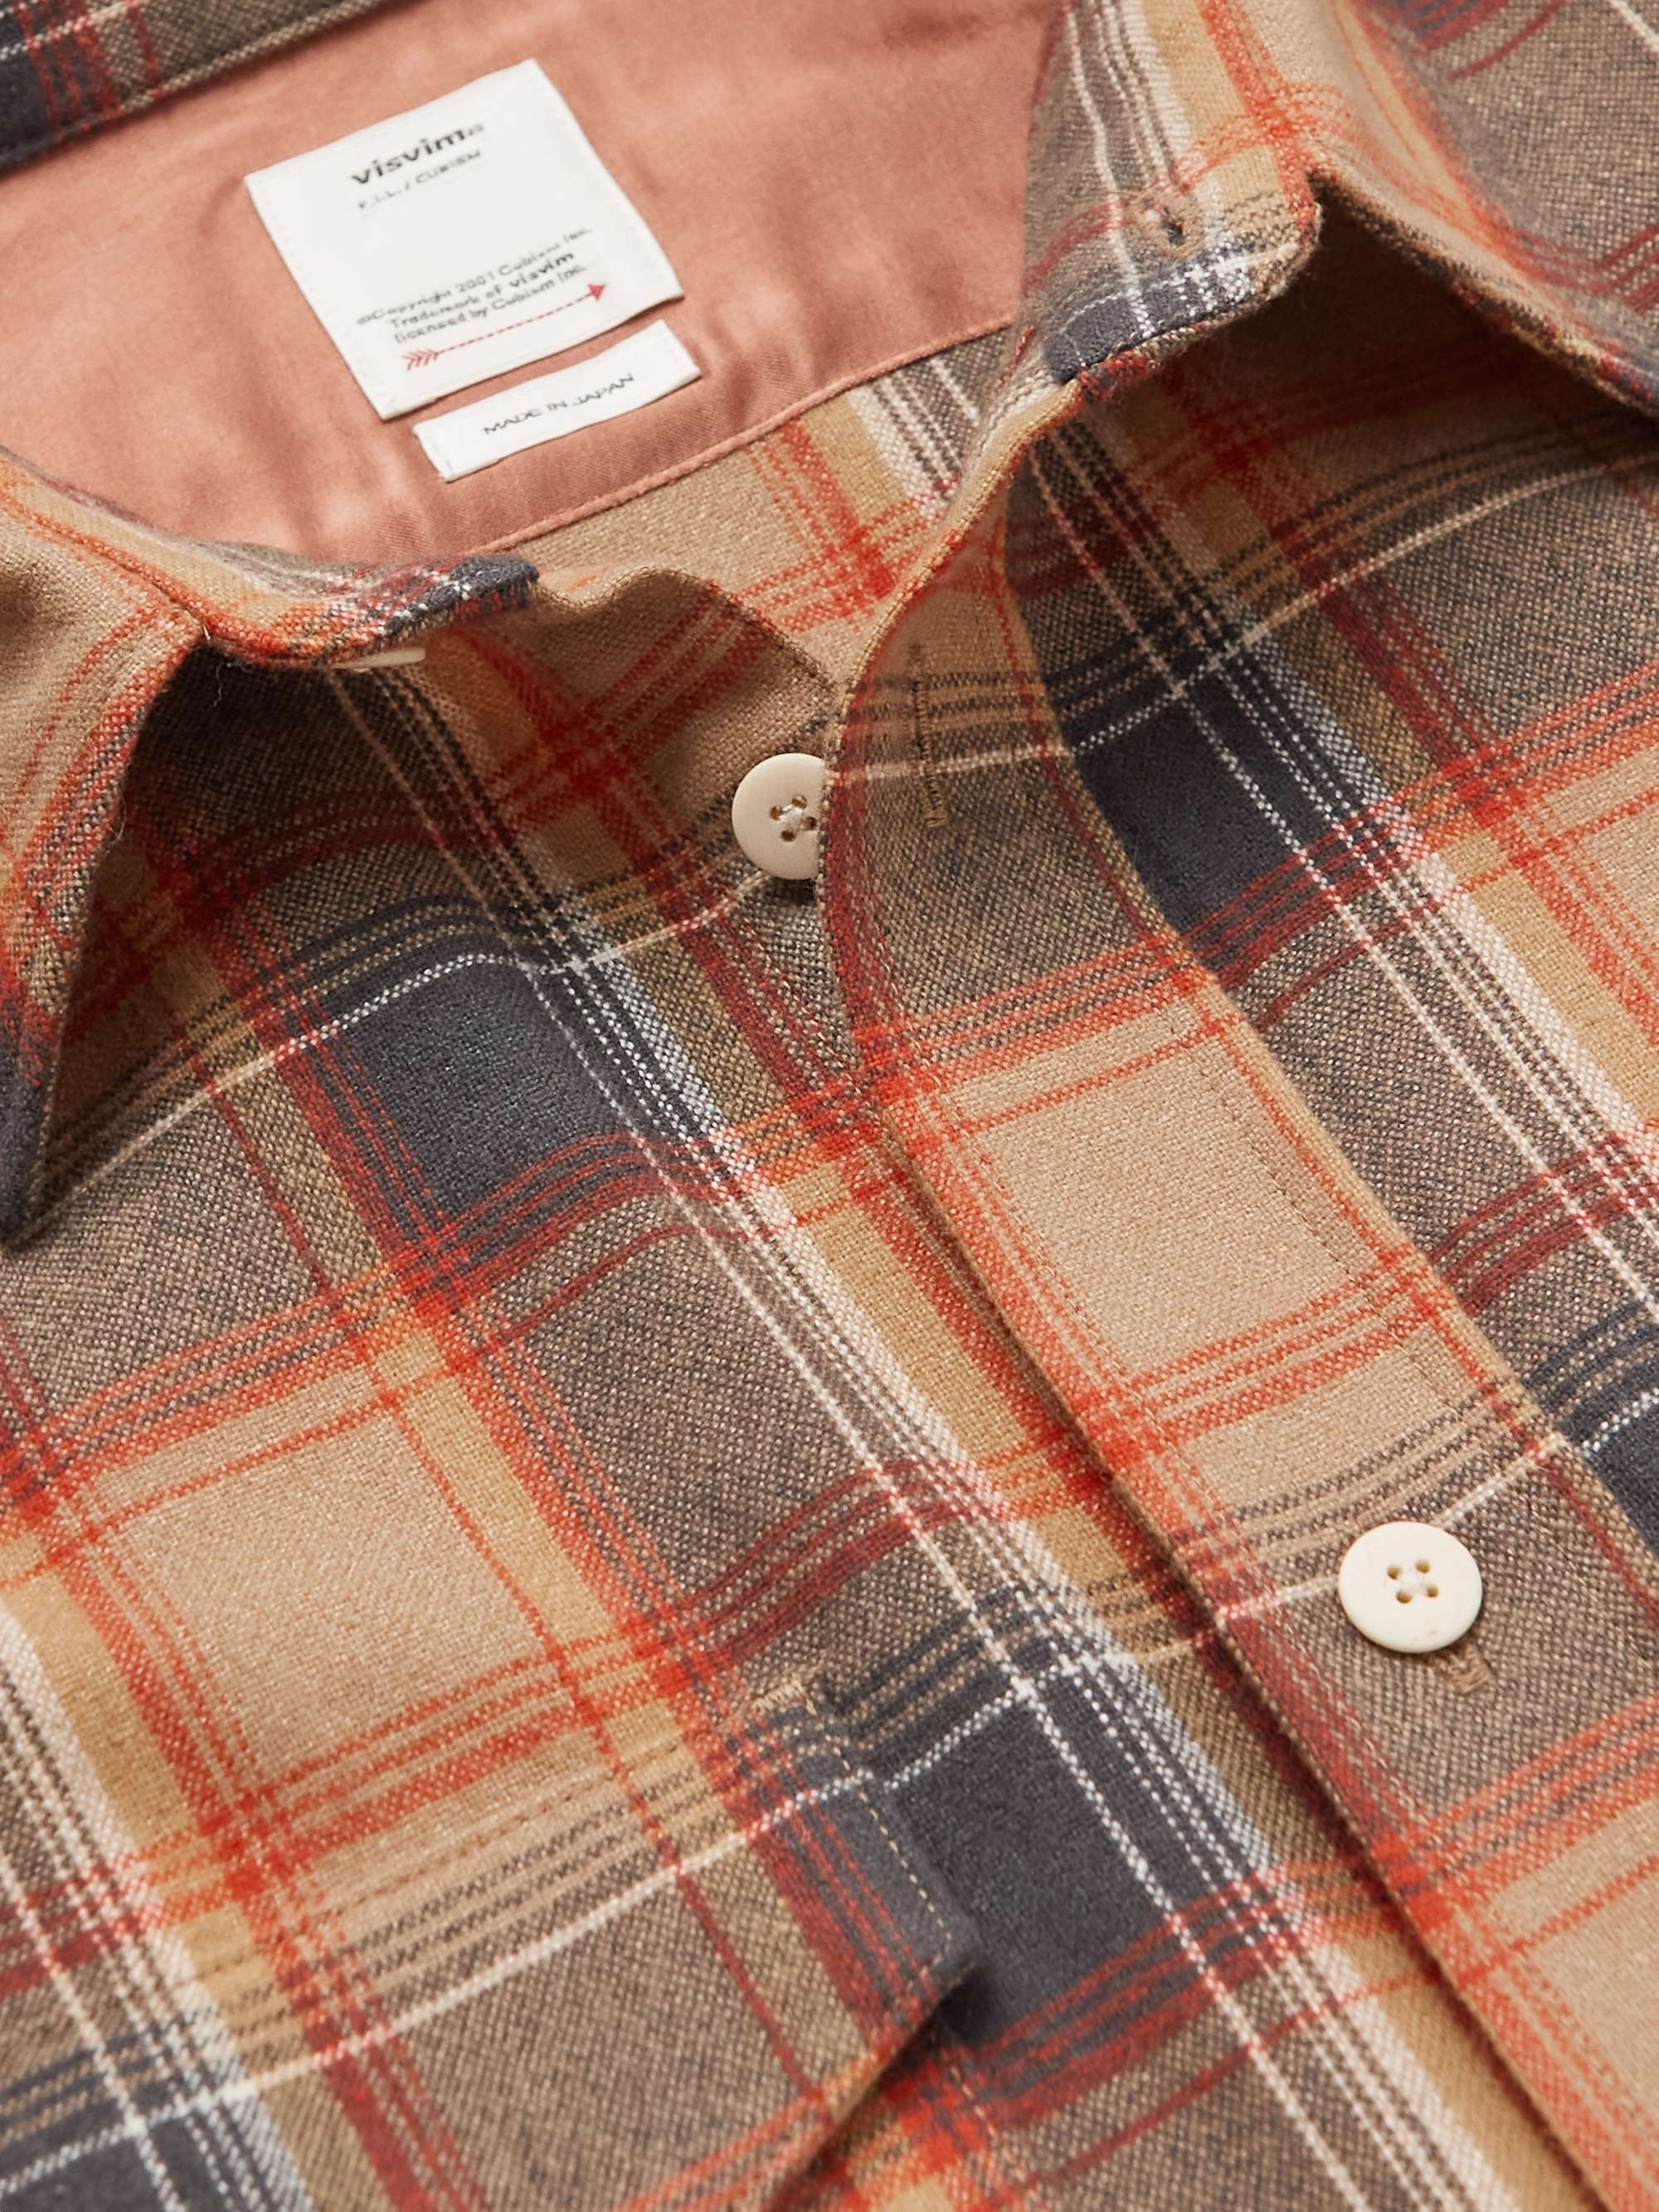 VISVIM Frontier Checked Wool and Linen-Blend Flannel Shirt